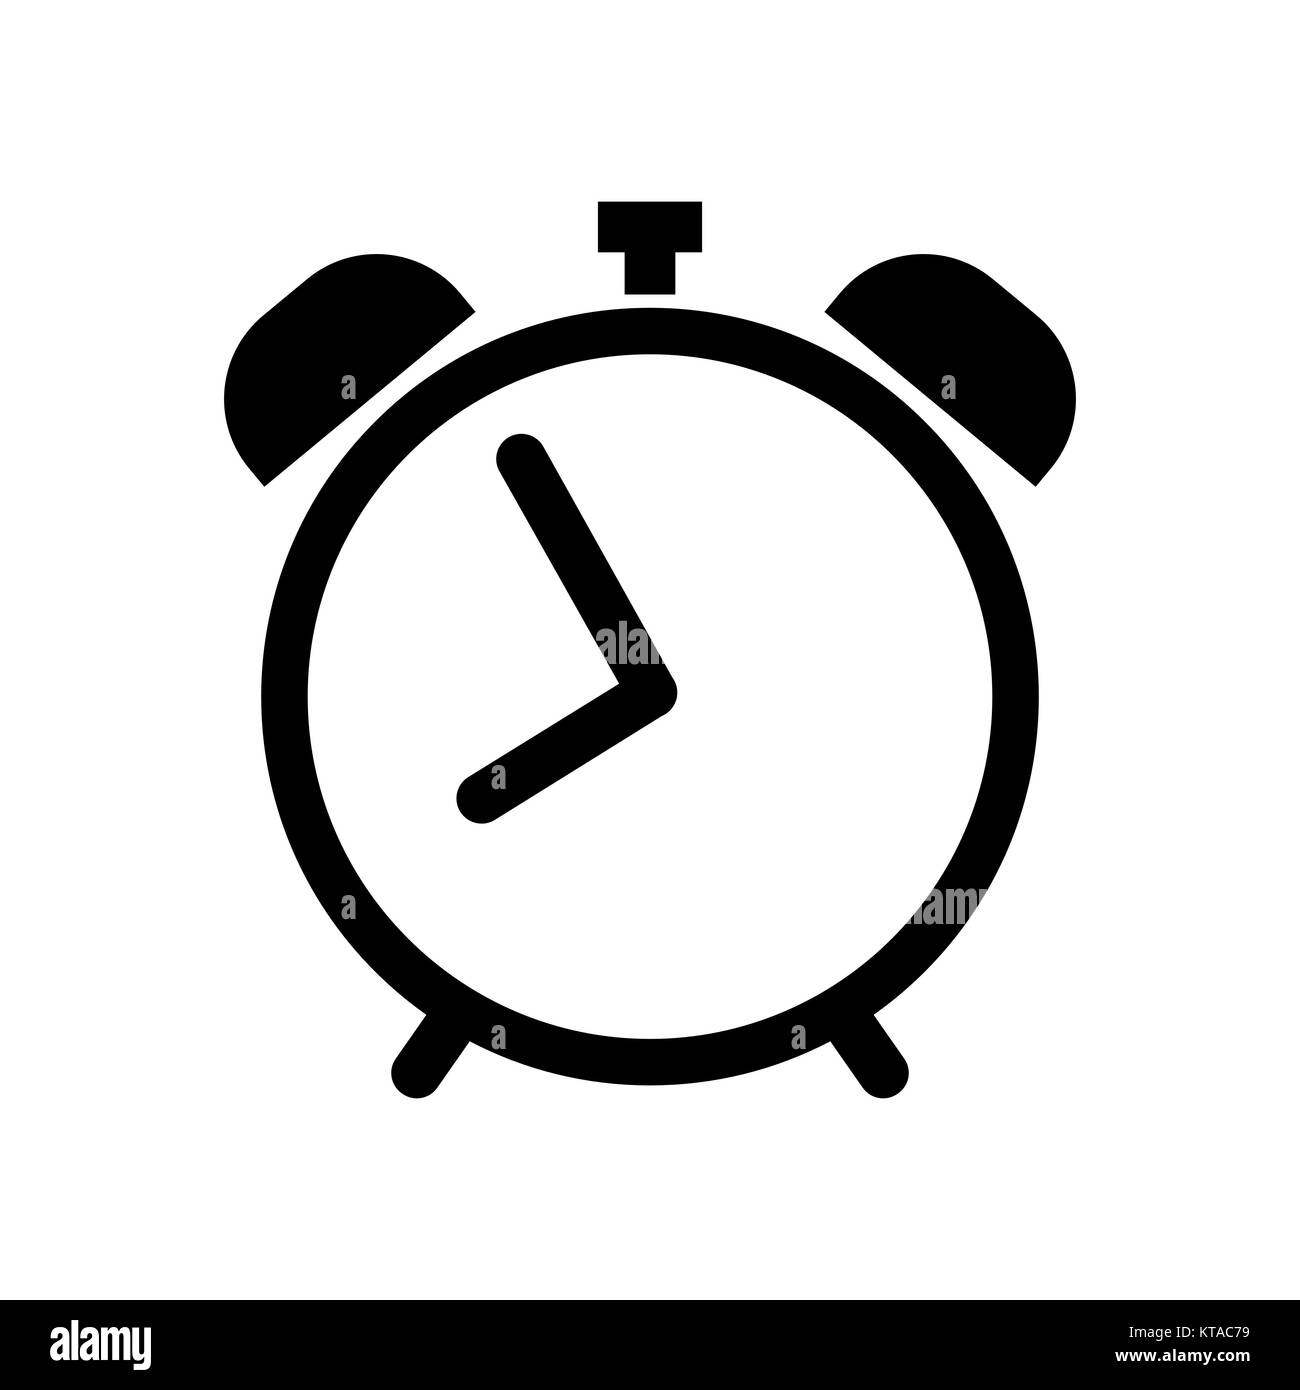 Alarm clock icon in black. Stock Vector